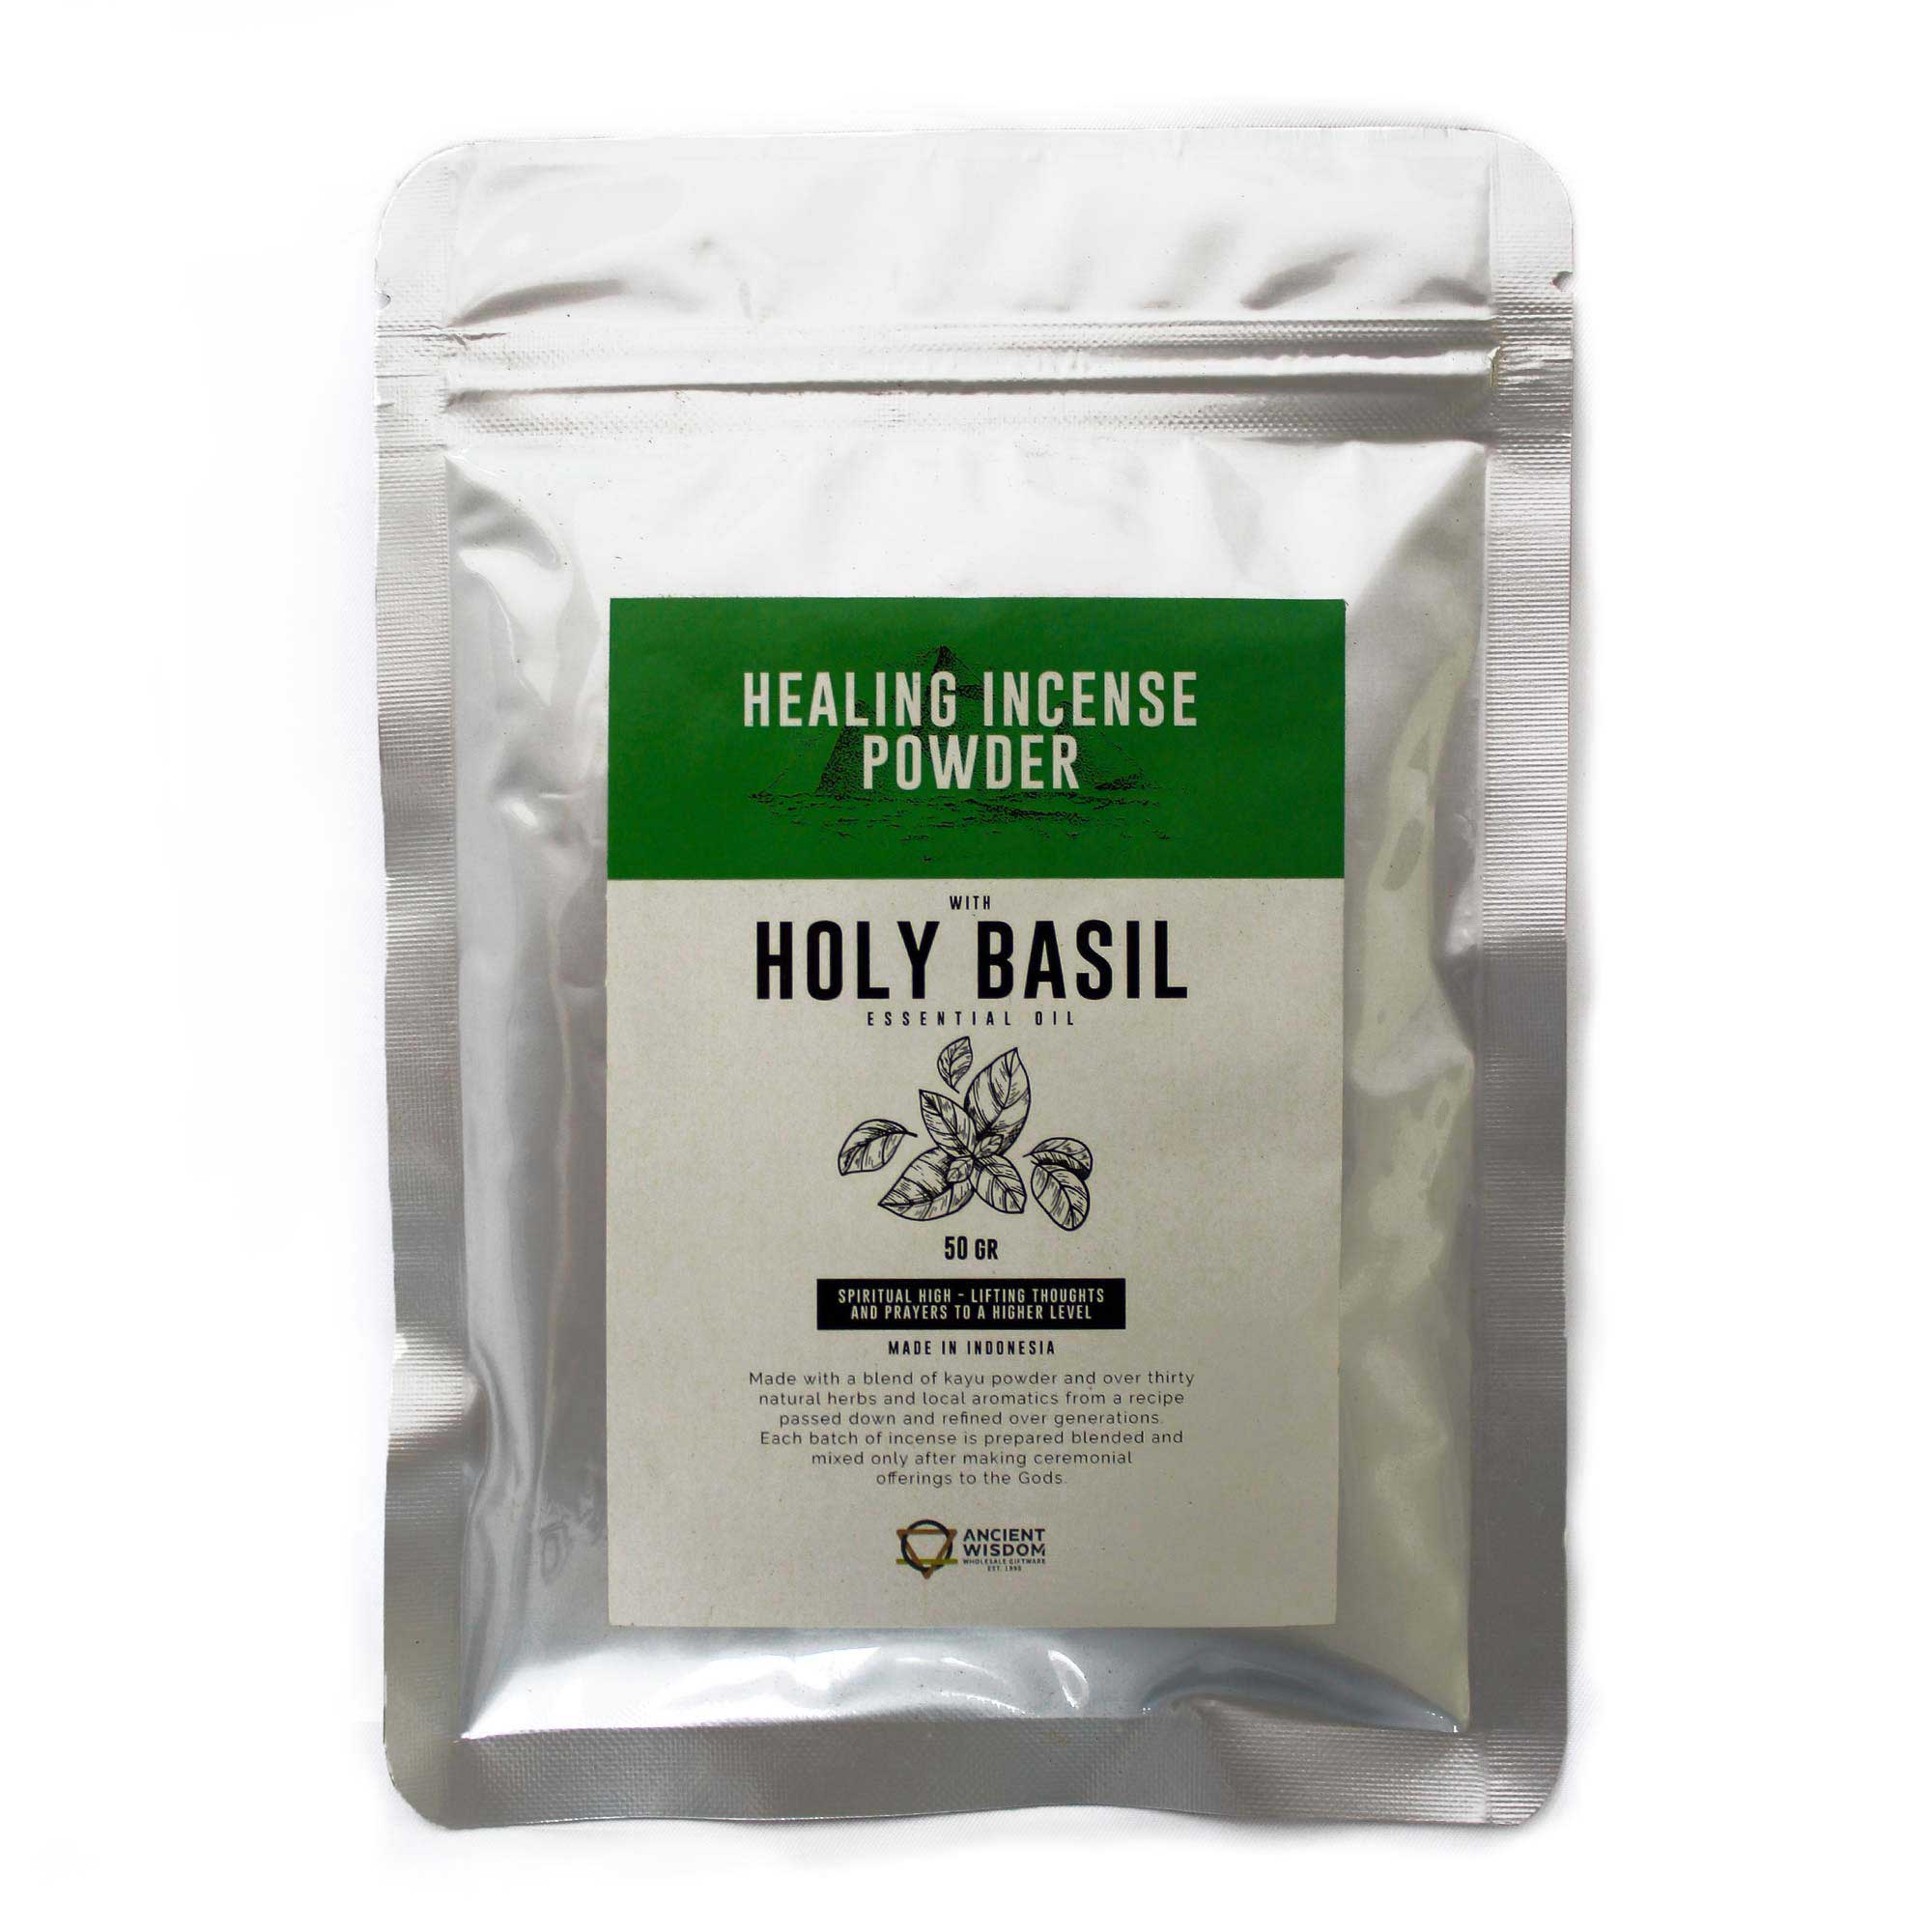 View Healing Incense Powder Holy Basil 50gm information